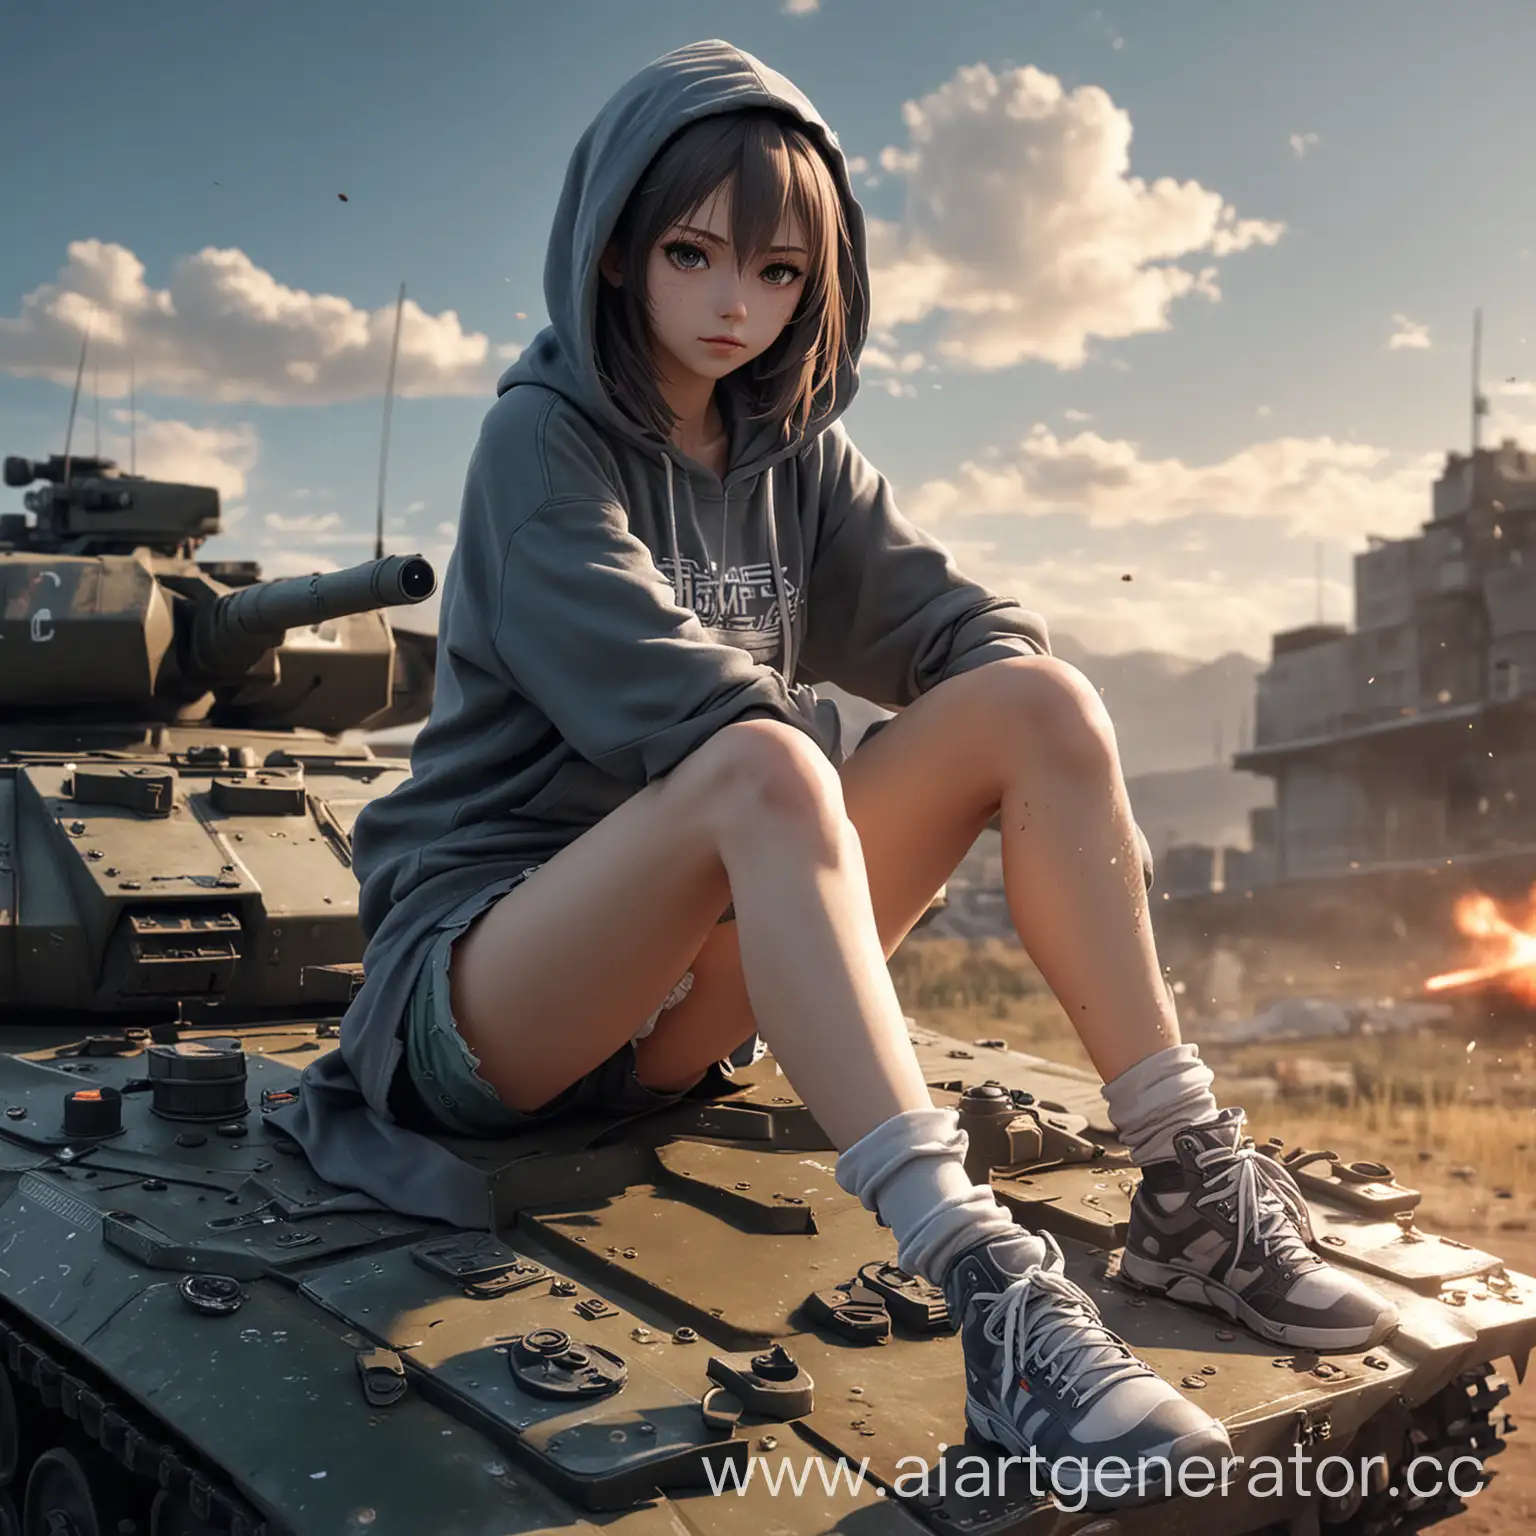 Cute-Anime-Girl-Sitting-on-Tank-with-Gunshot-Effects-in-Battlefield-Scene